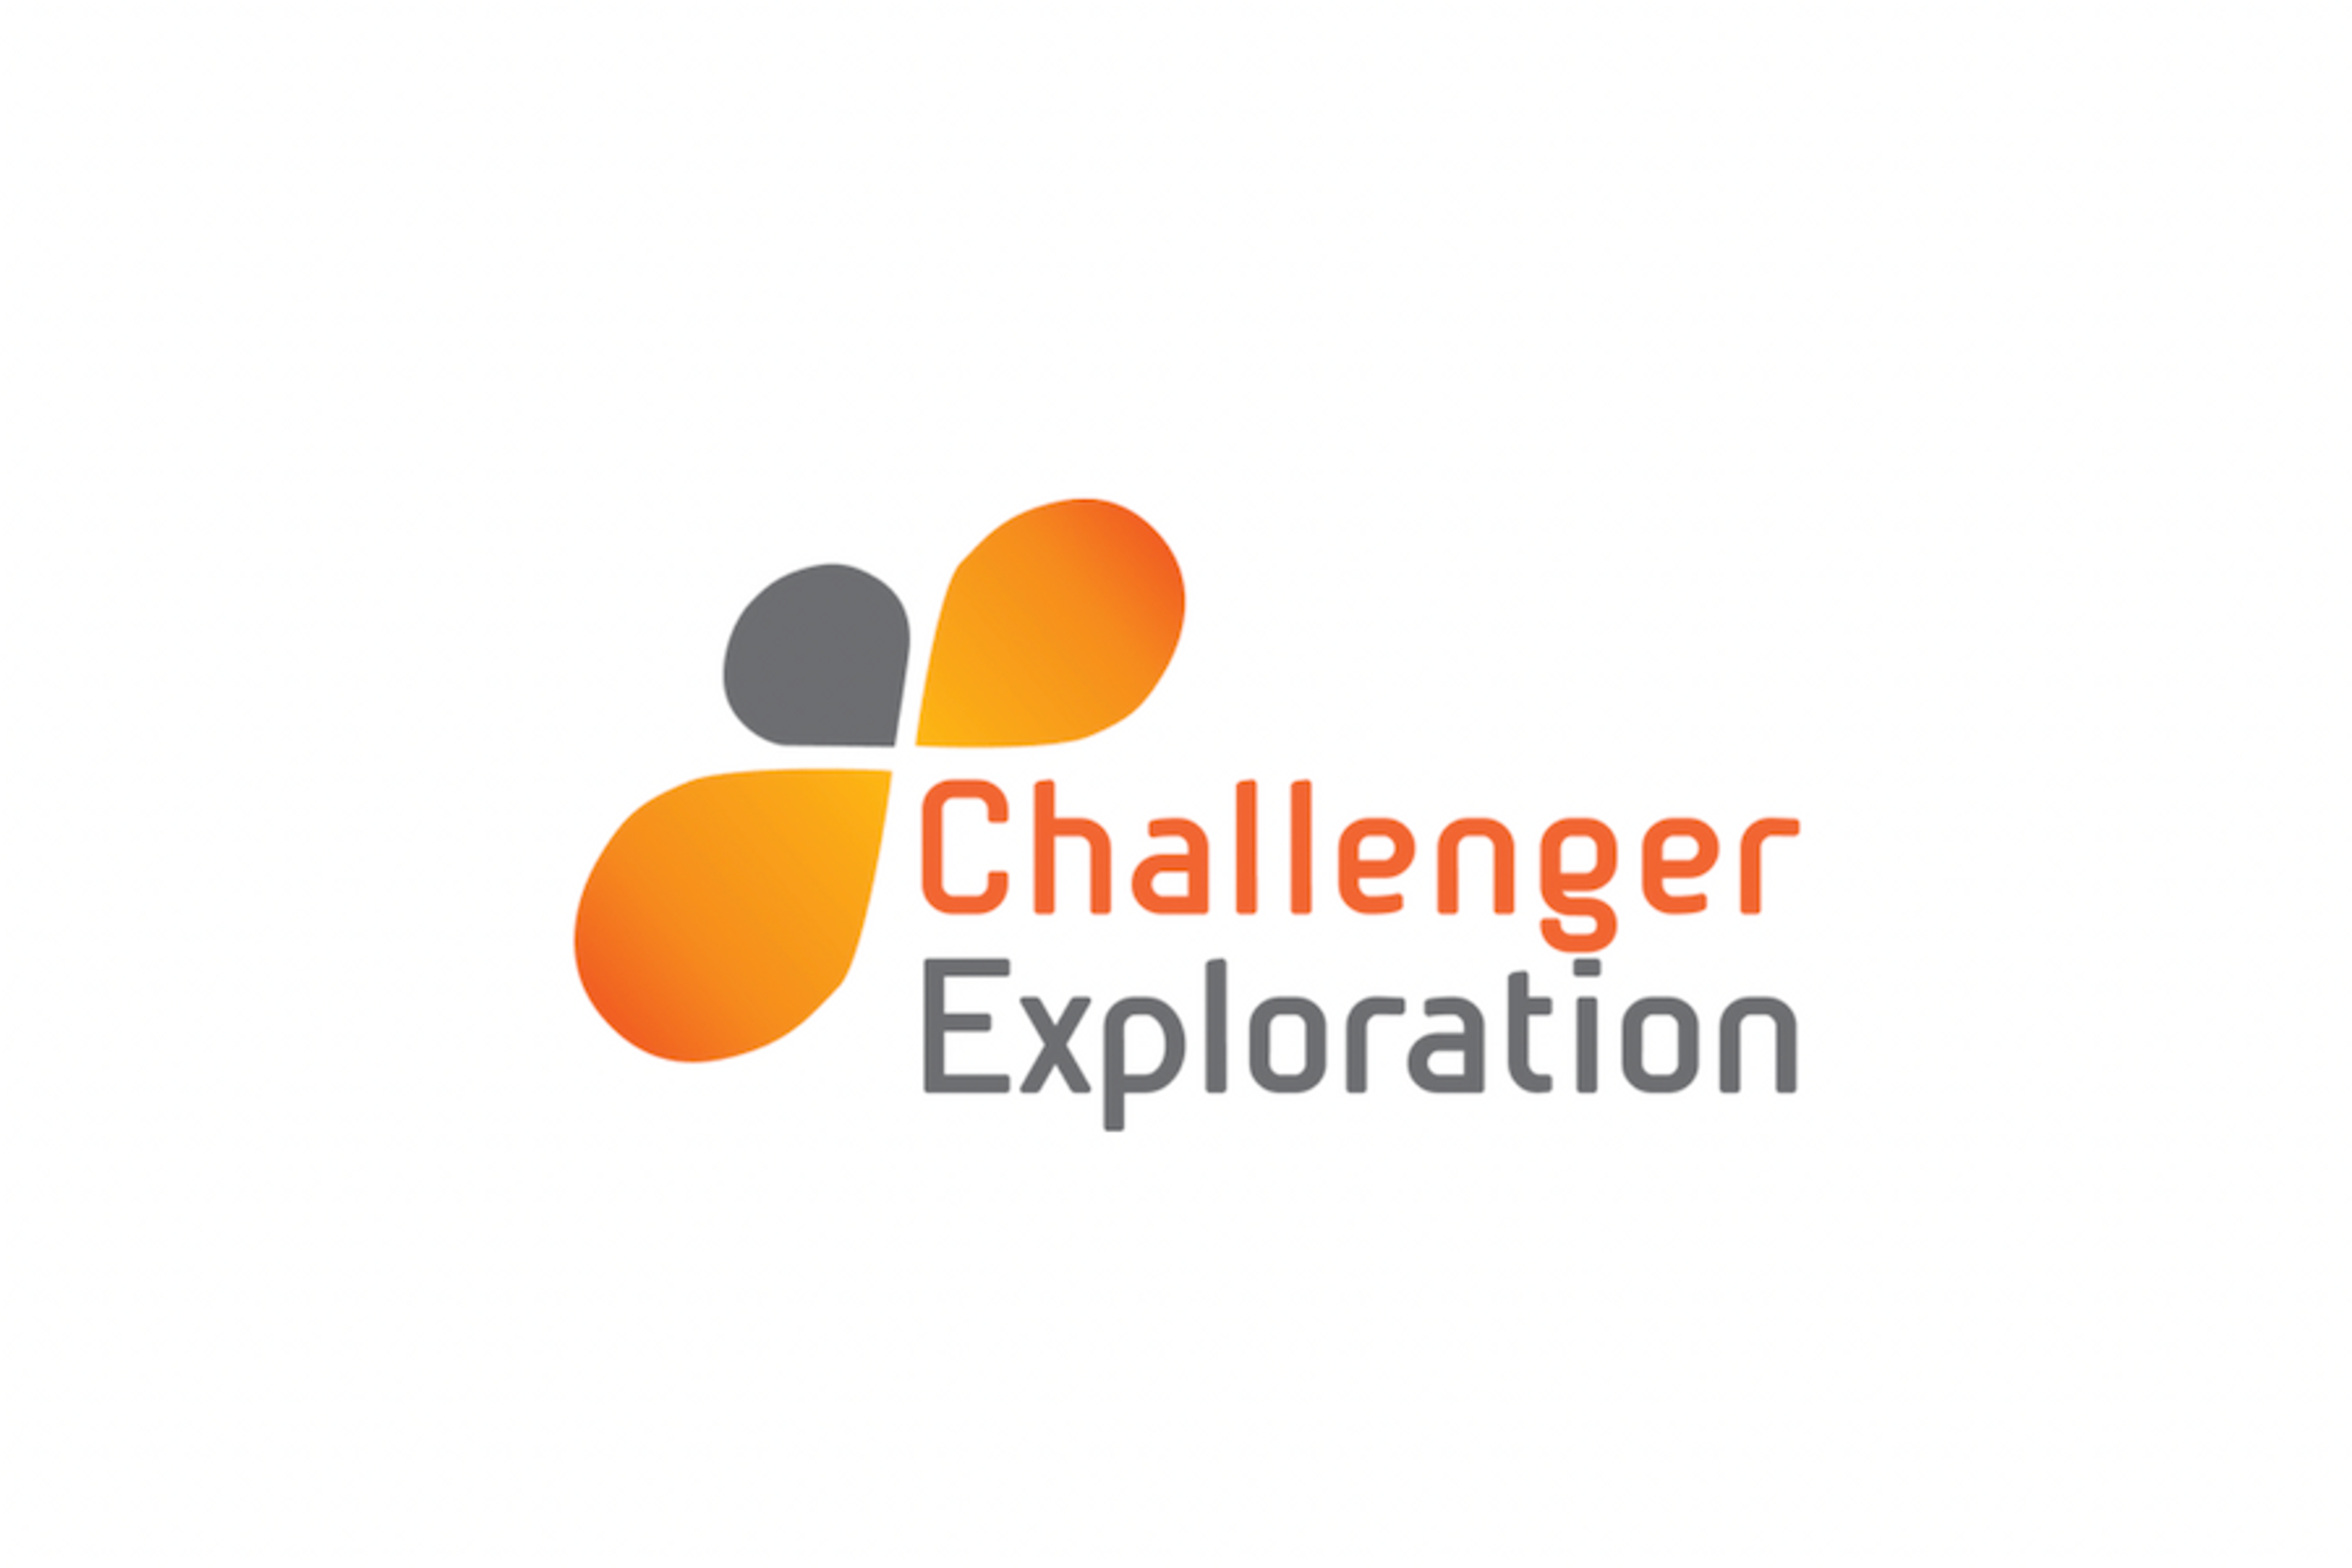 Challenger Exploration